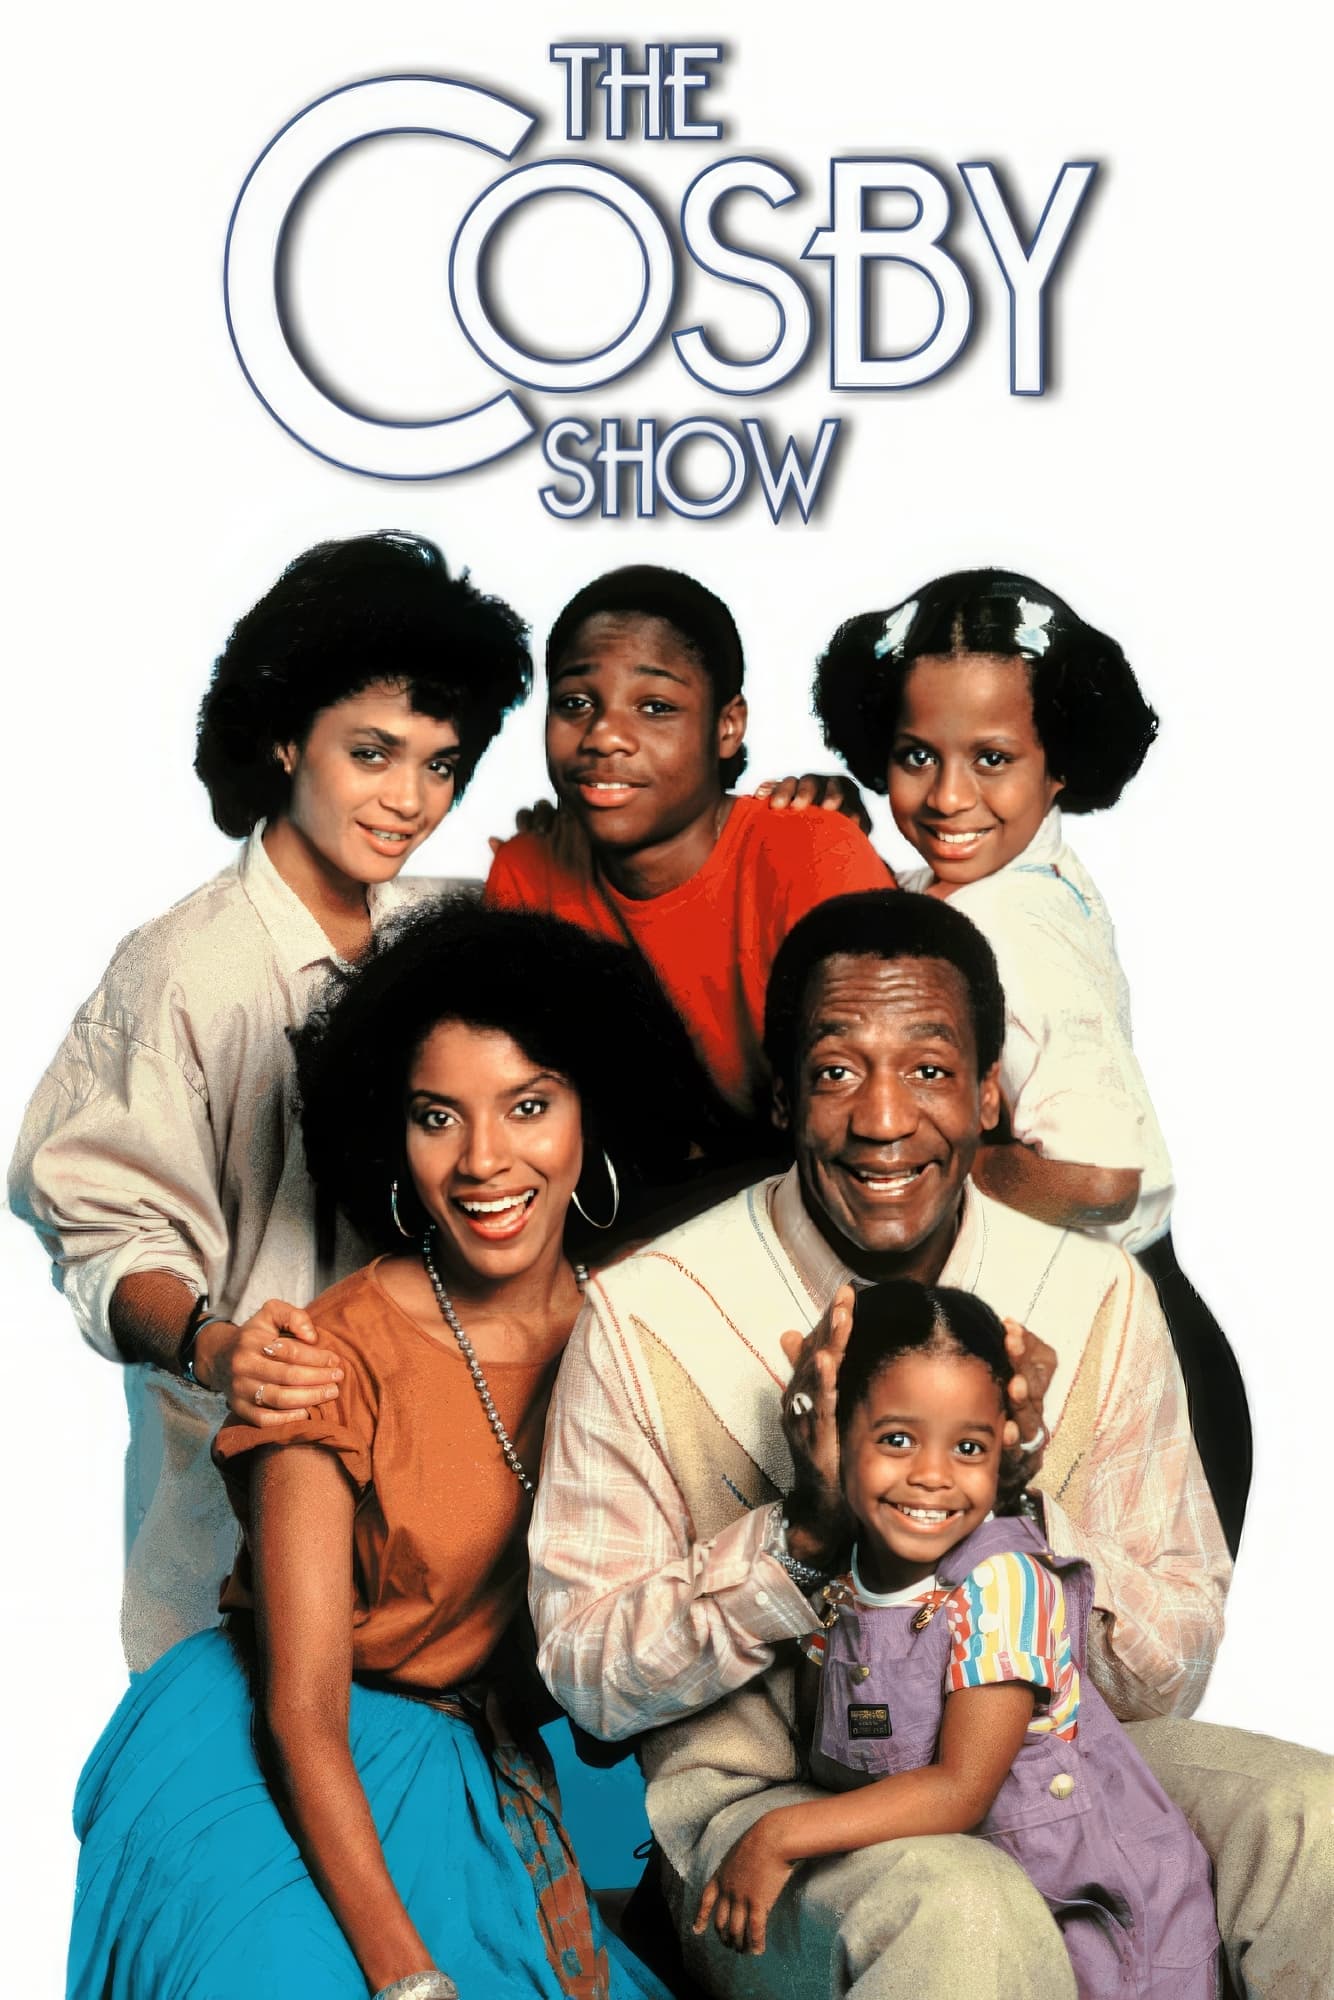 Die Bill Cosby Show